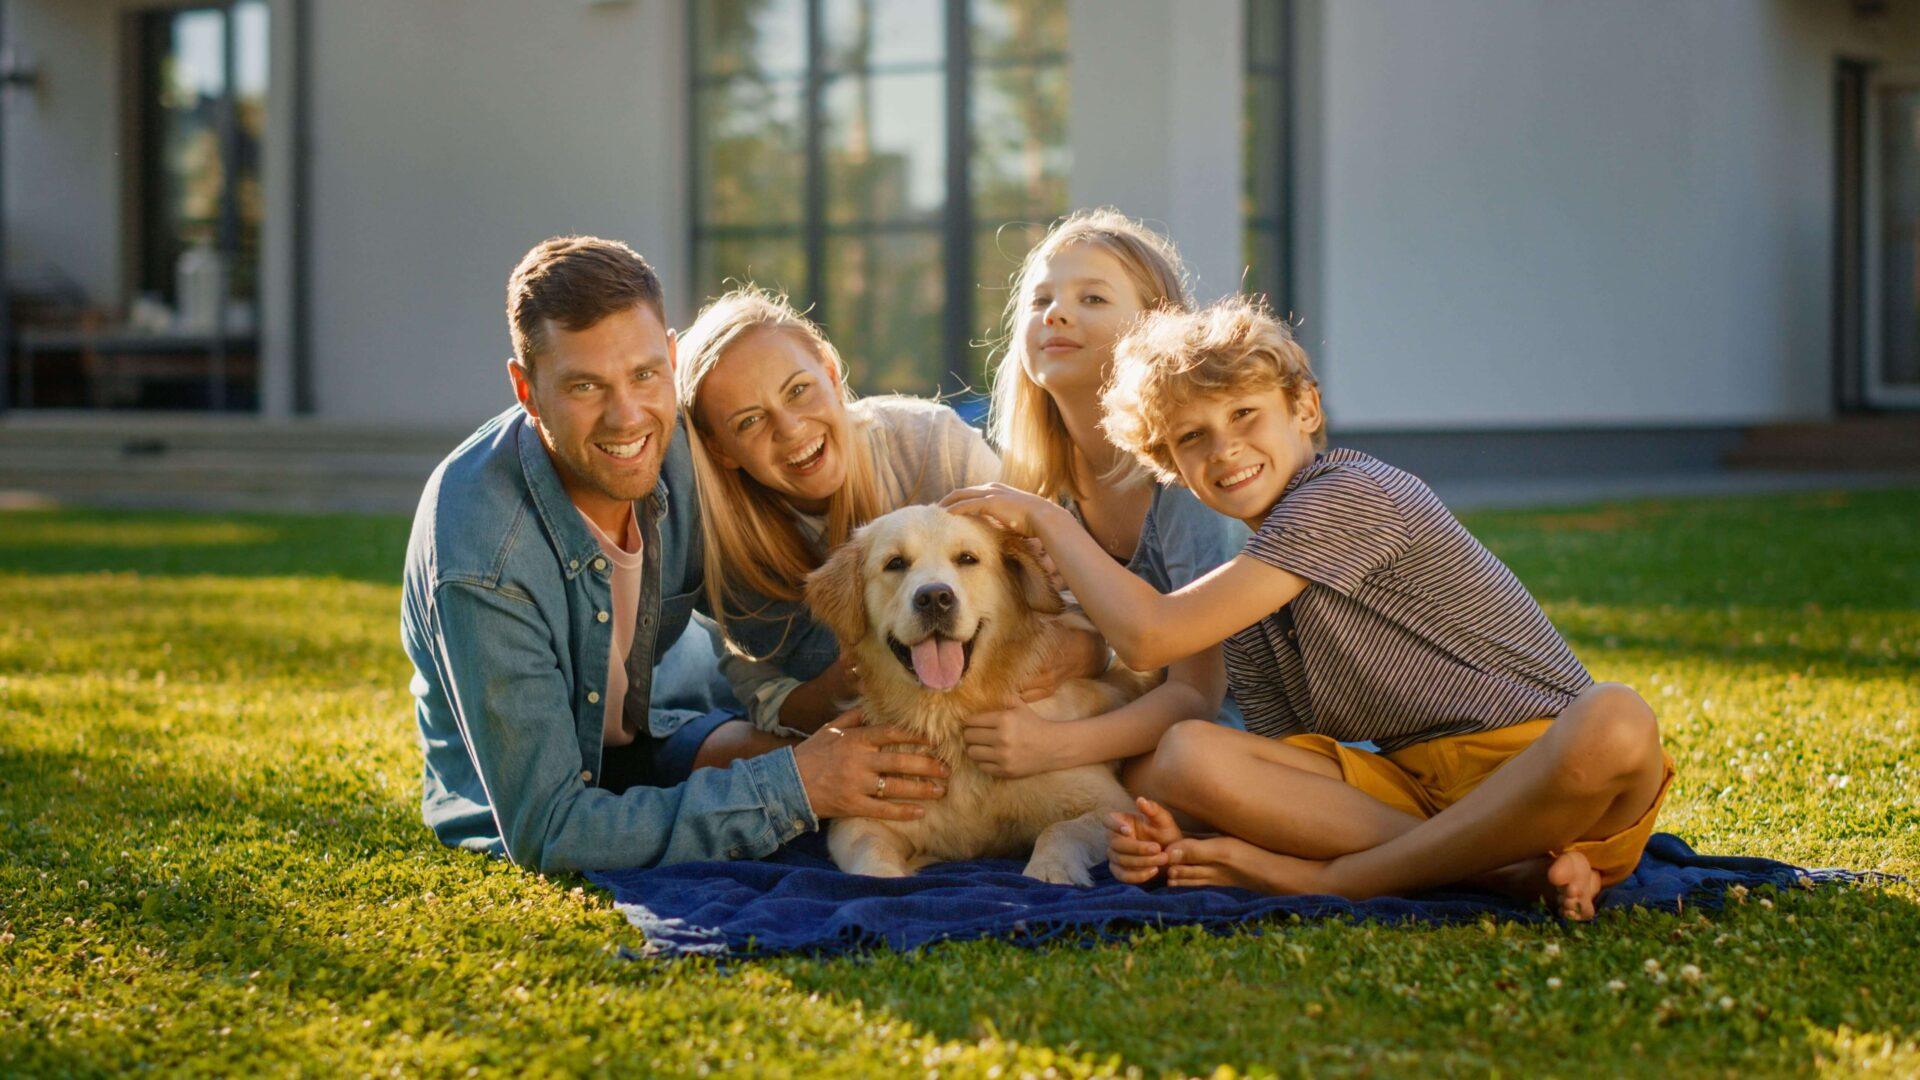 Fence-a-pet Happy Family